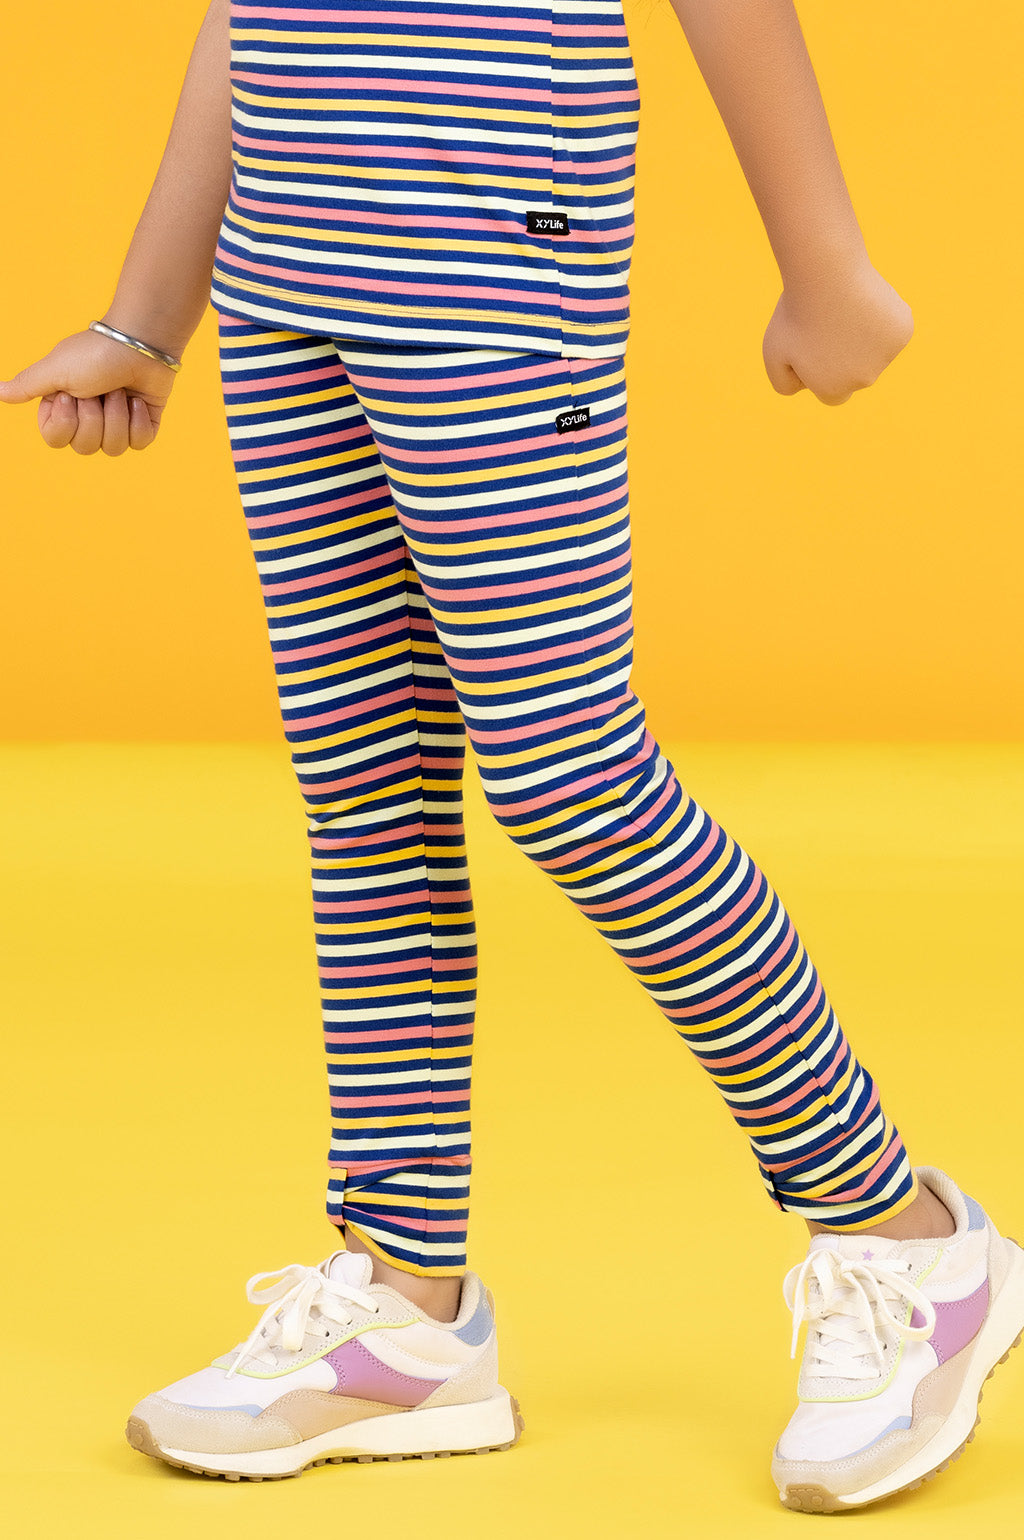 Shop Girl CASTIRONDO Kids Organic Cotton Printed Leggings - XL